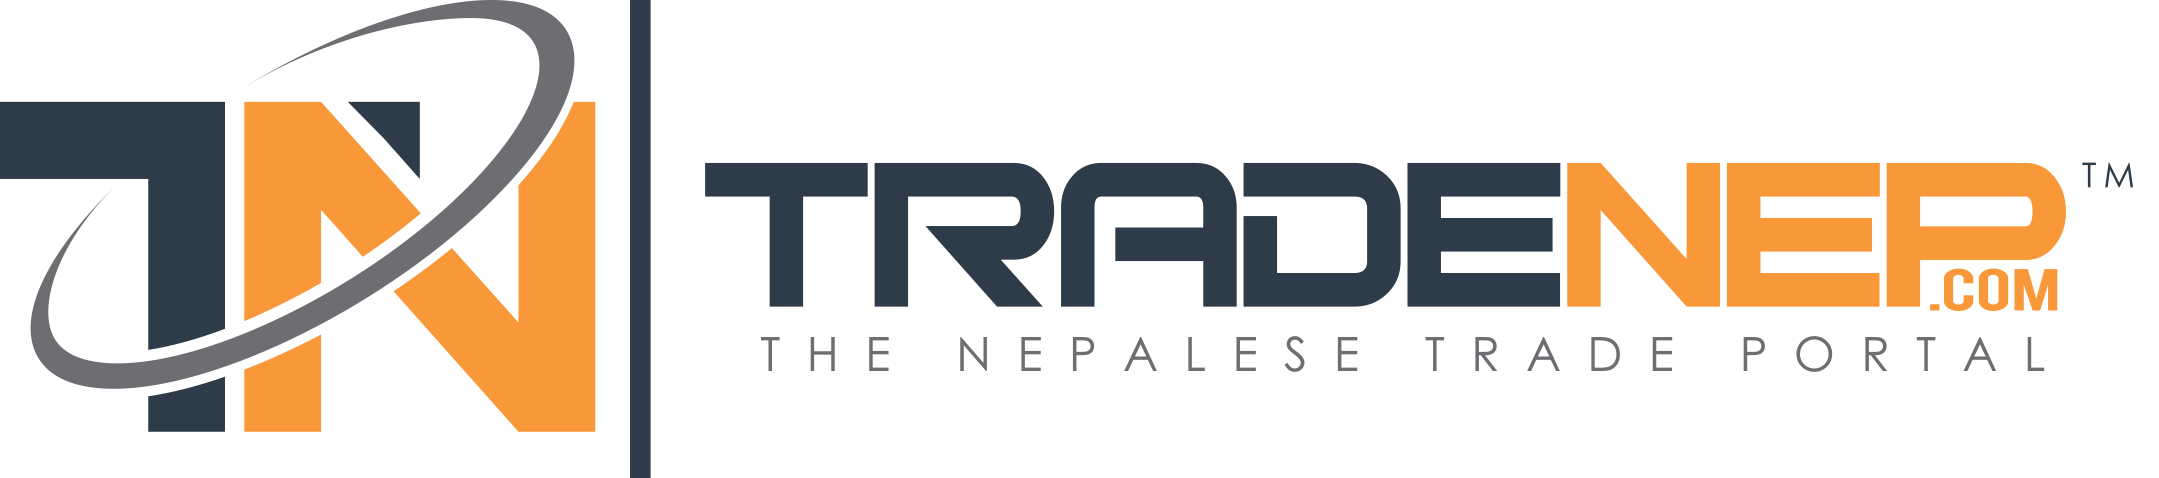 Trade Portal Nepal